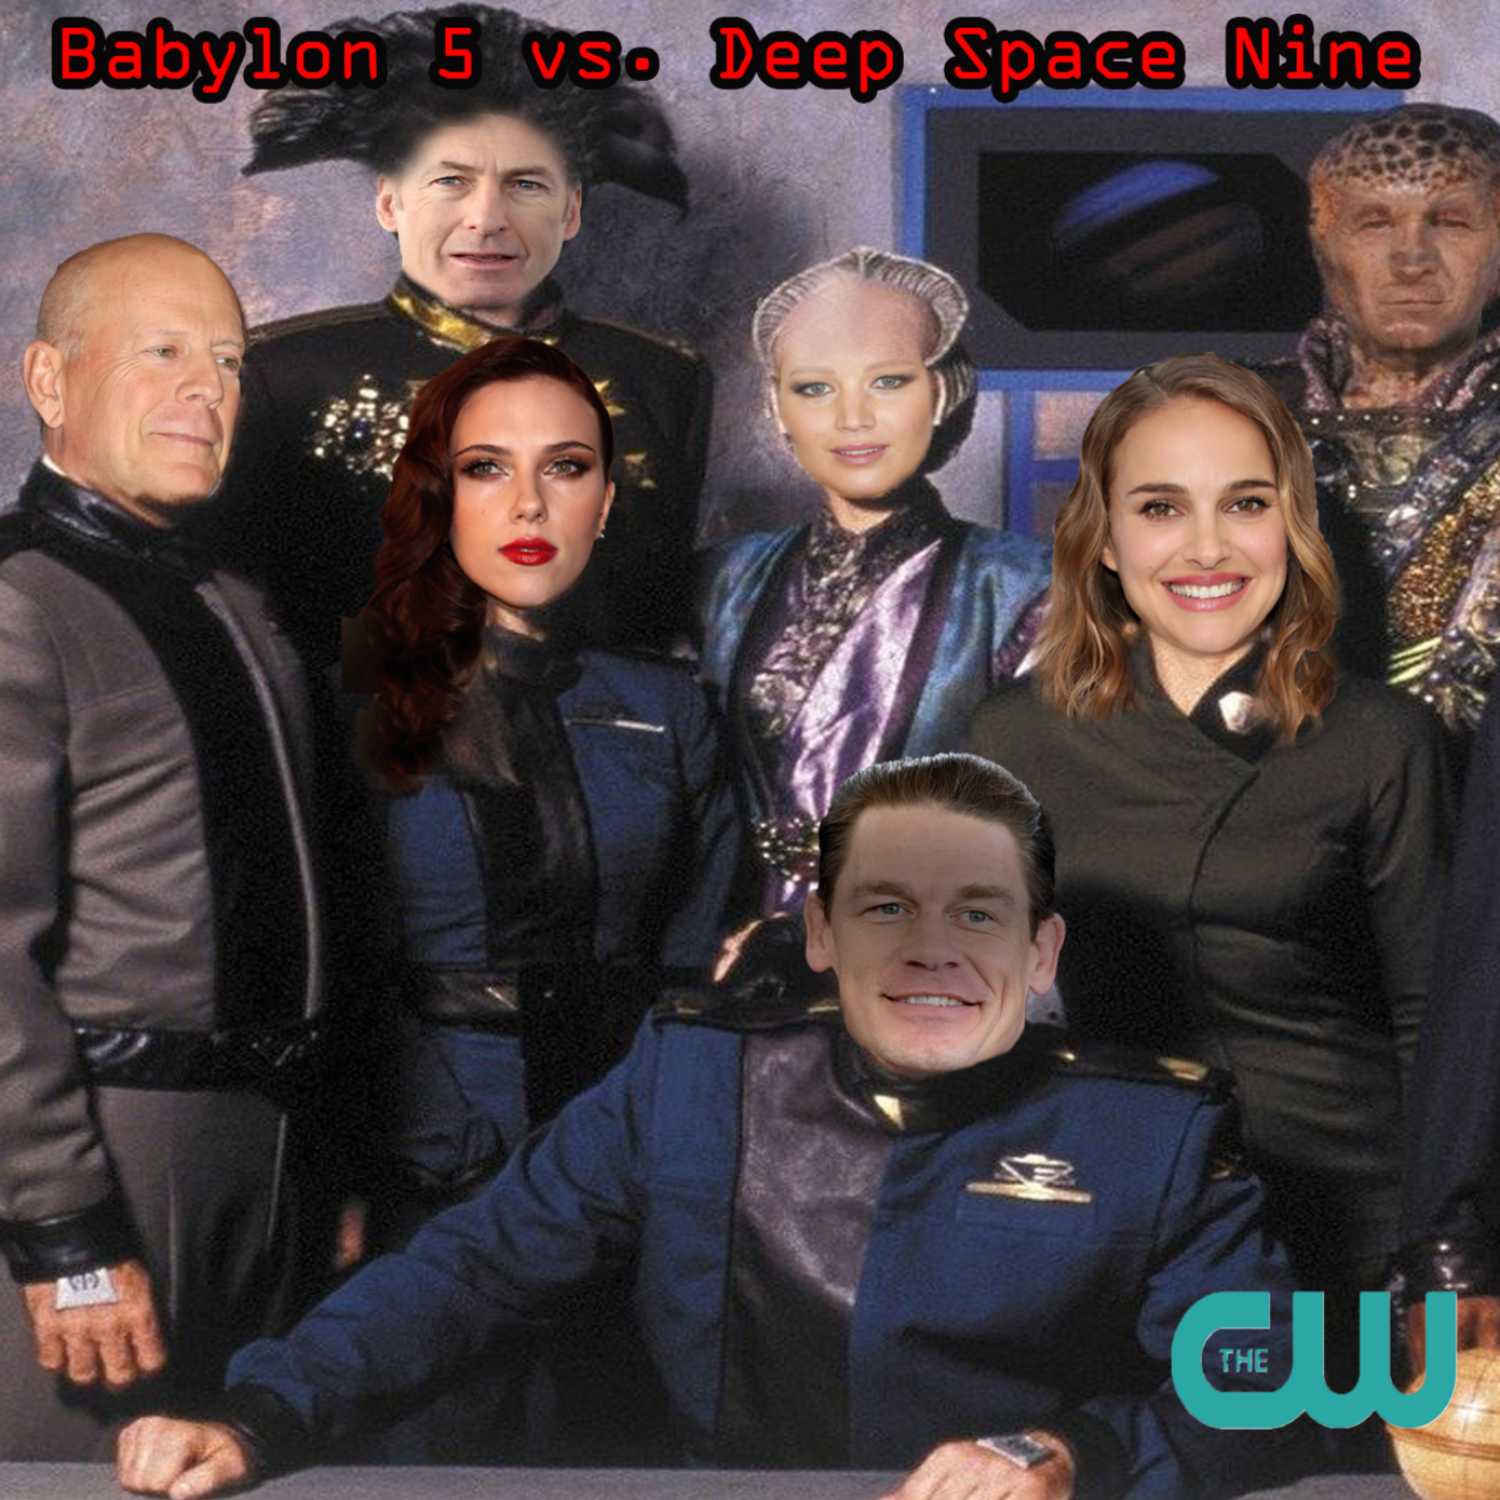 Babylon 5: The CW Reboot